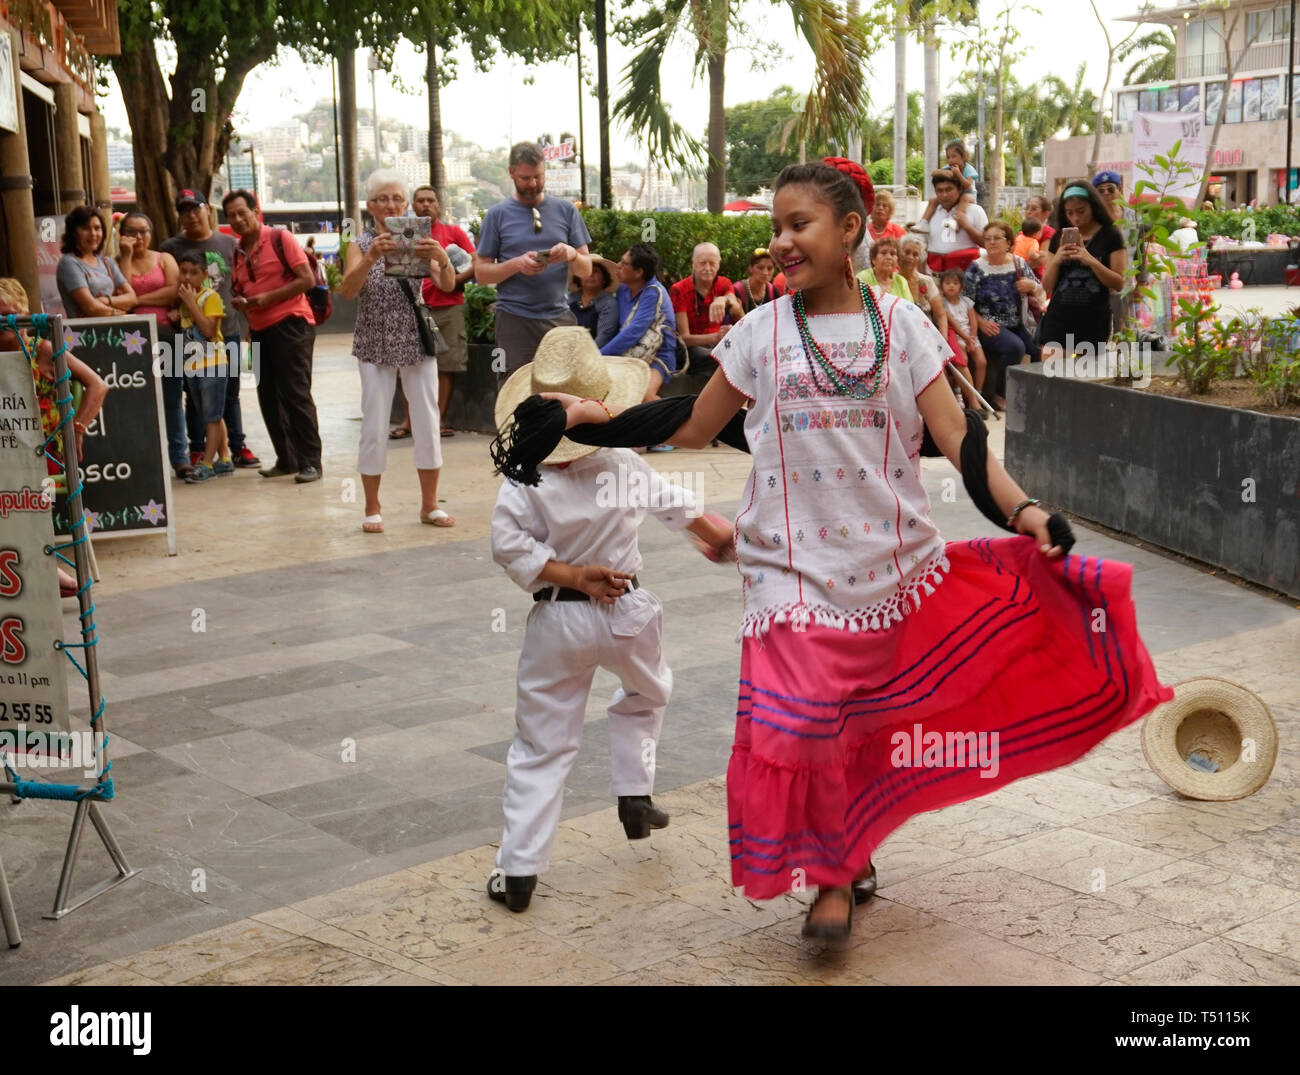 Family of traditional dancers, La Plaza Alvarez (The Zocalo), Acapulco, Mexico. Performing for tourist contributions. Stock Photo